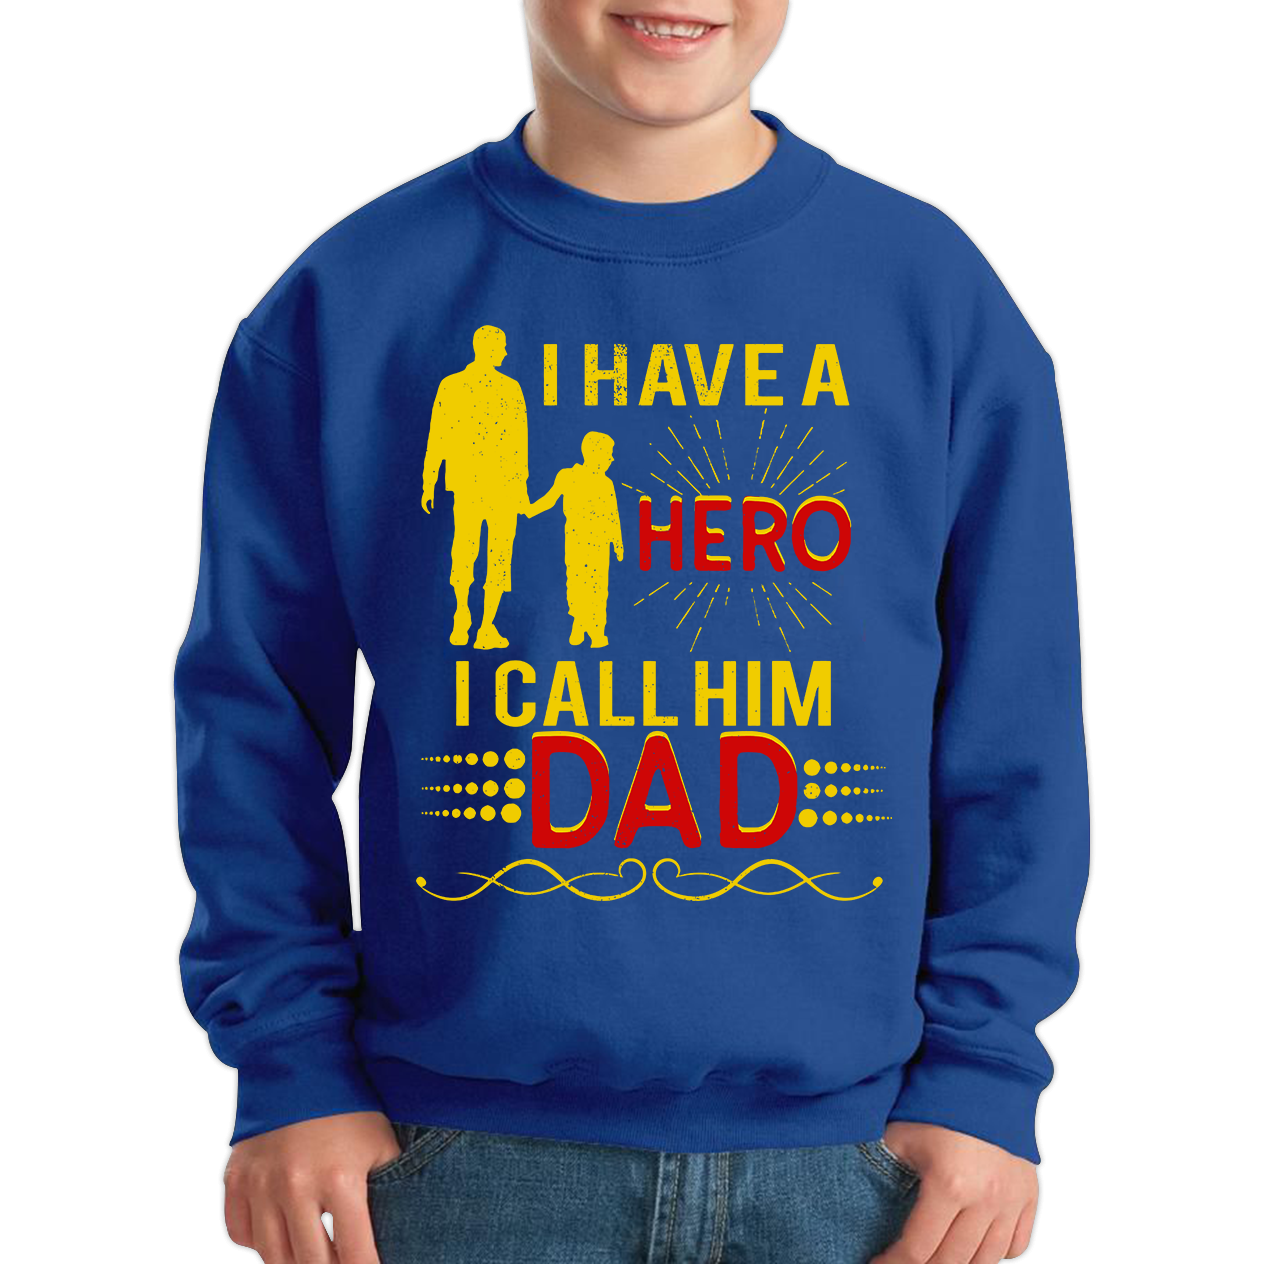 I Have A Hero I Call Him Dad Kids Sweatshirt